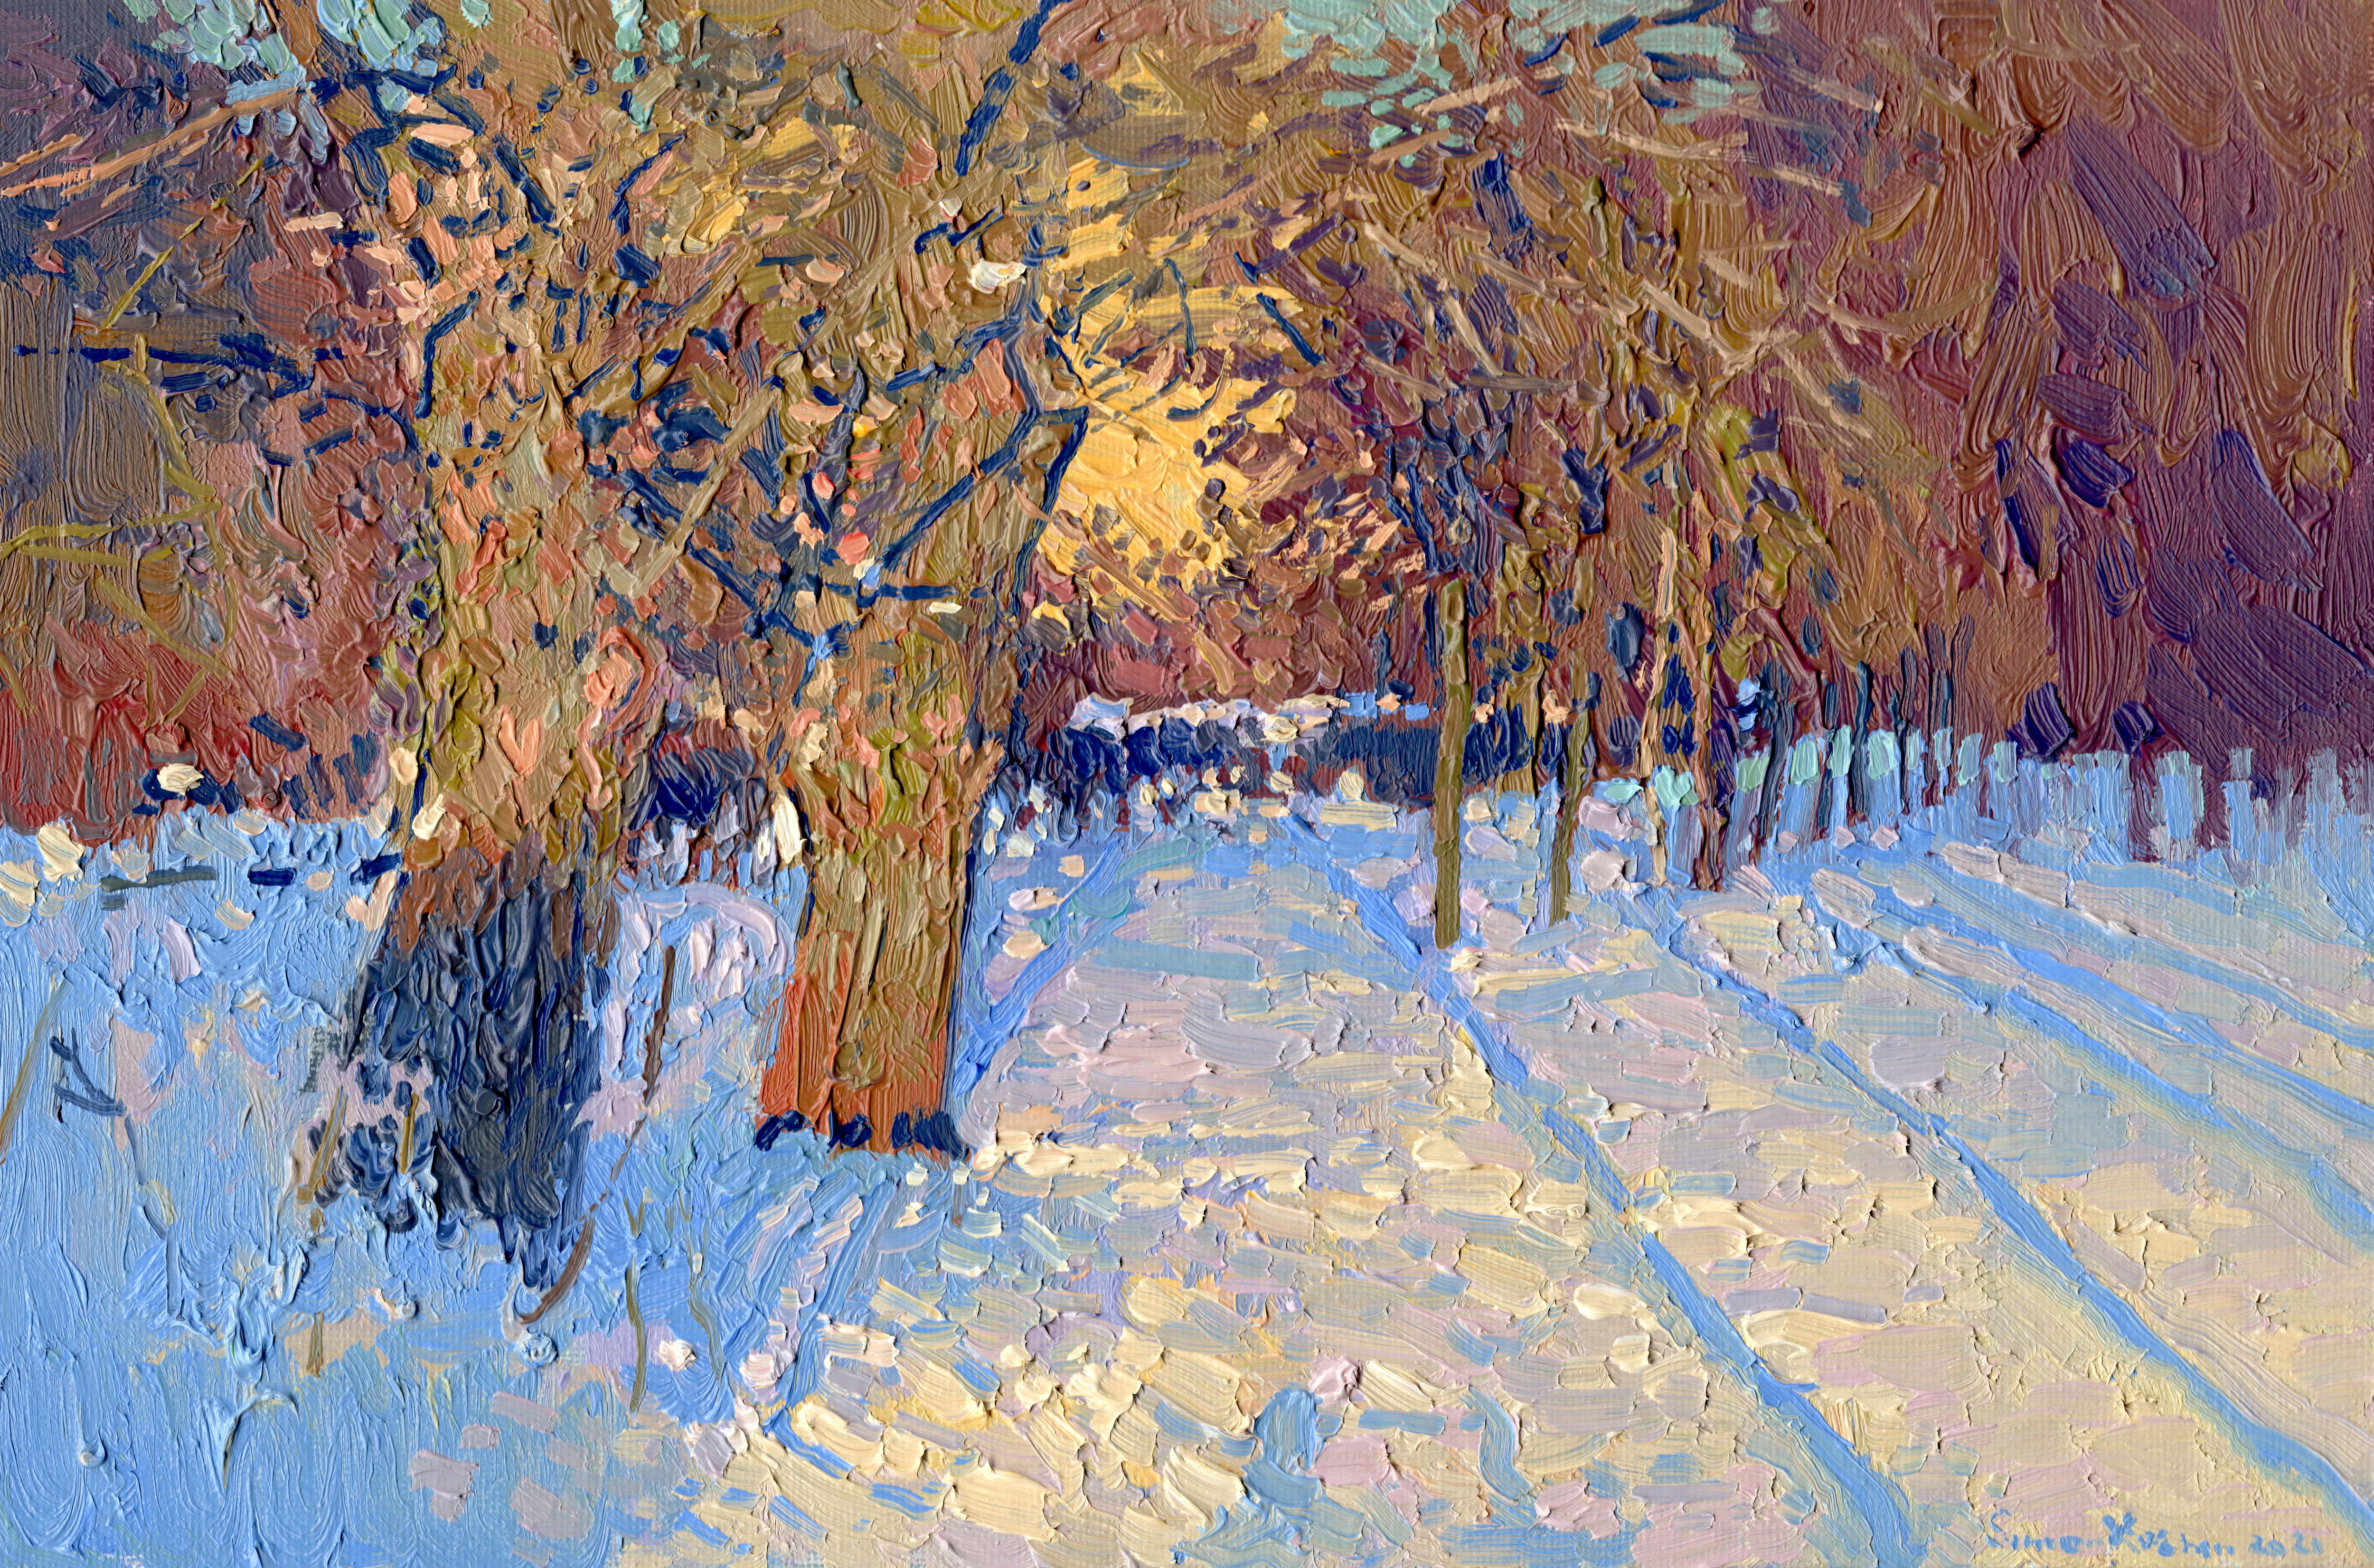 Simon Kozhin Landscape Painting - Frost and sun, Winter landscape oil painting, Plein air impressionist artwork